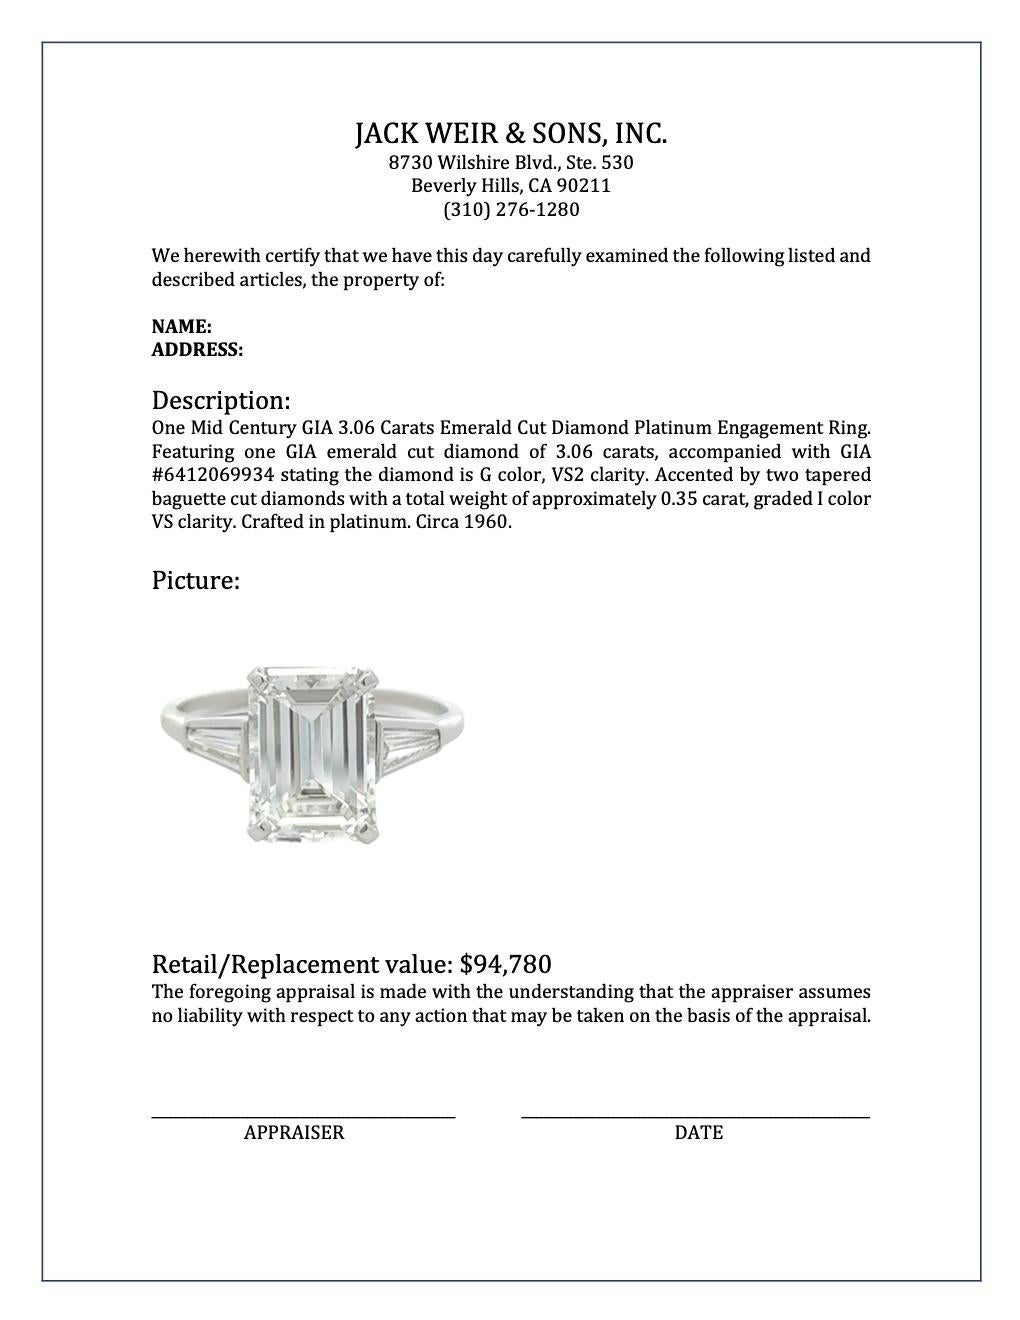 Mid Century GIA 3.06 Carats Emerald Cut Diamond Platinum Engagement Ring 3